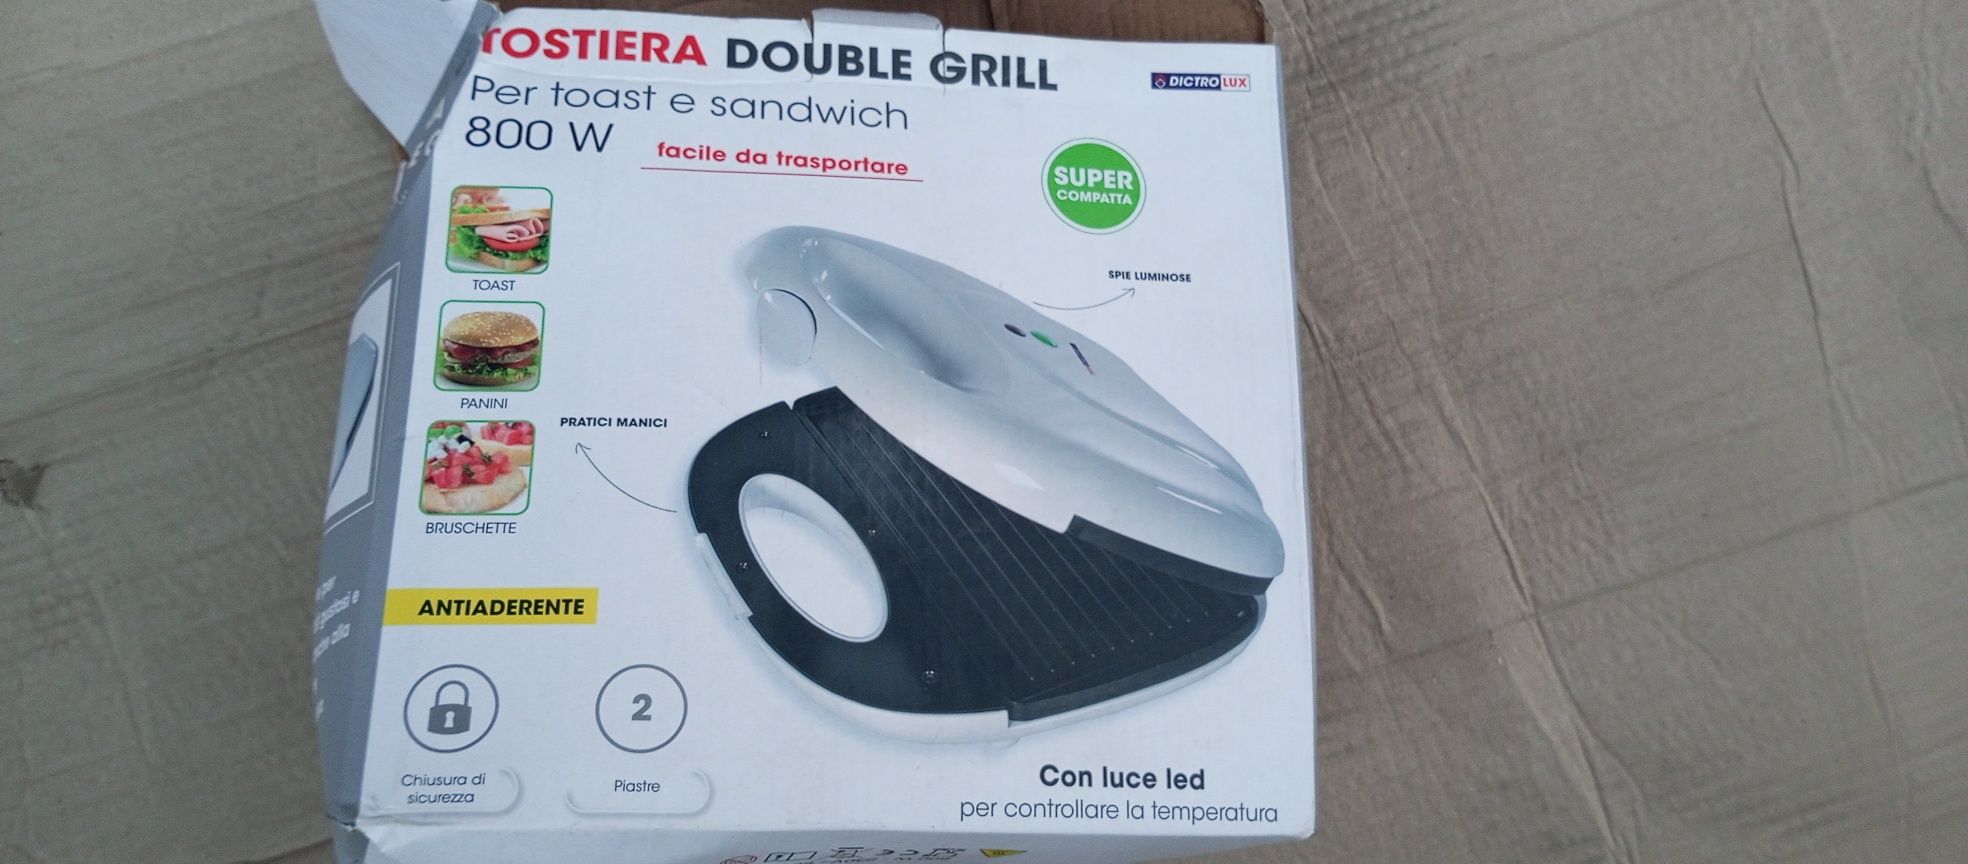 Електрогриль притискний Rostiera double grill